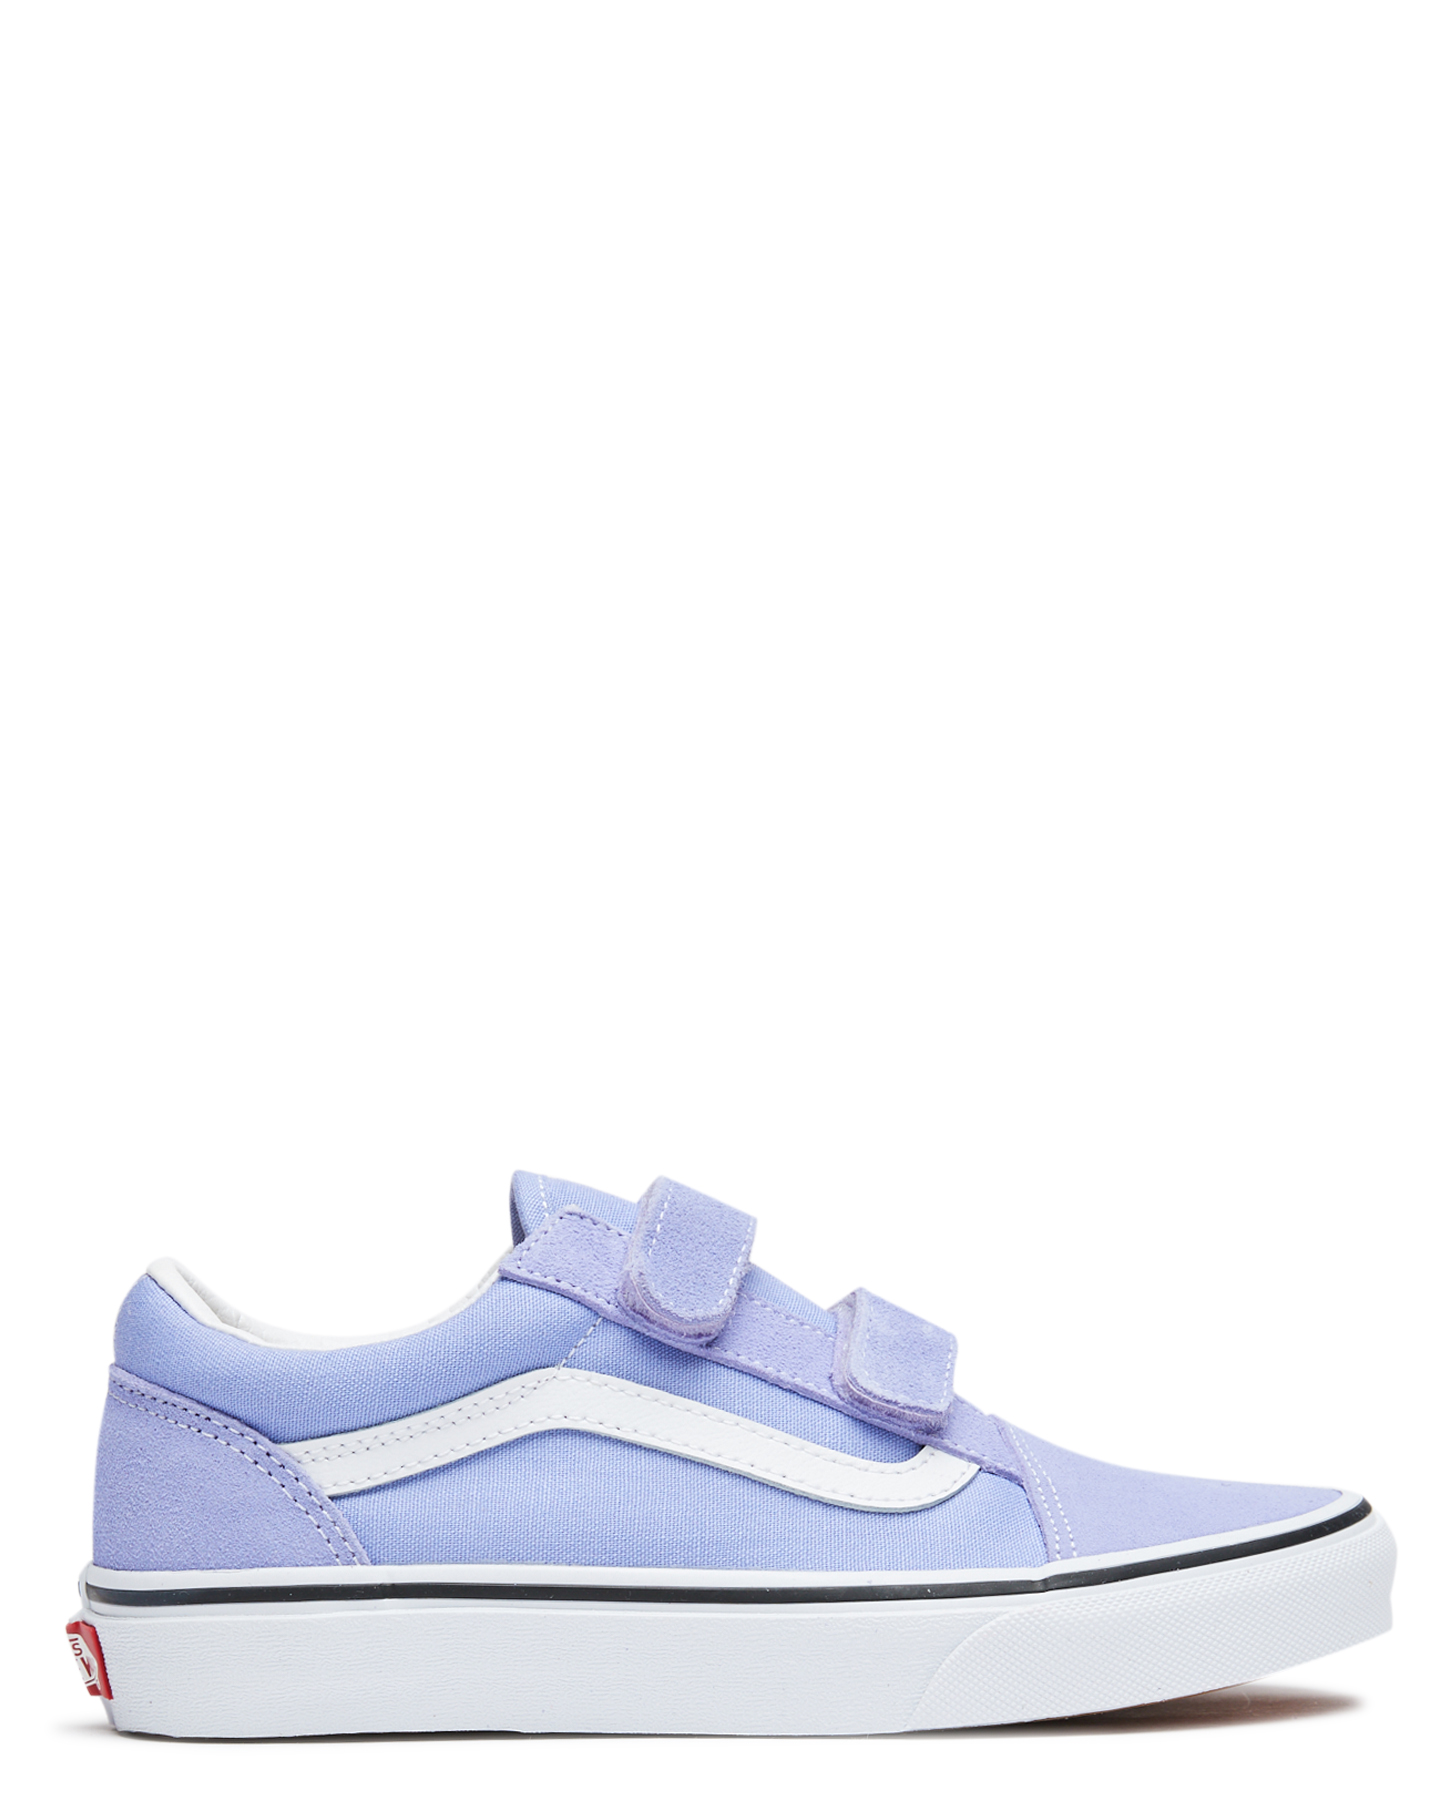 vans shoes for girls purple 